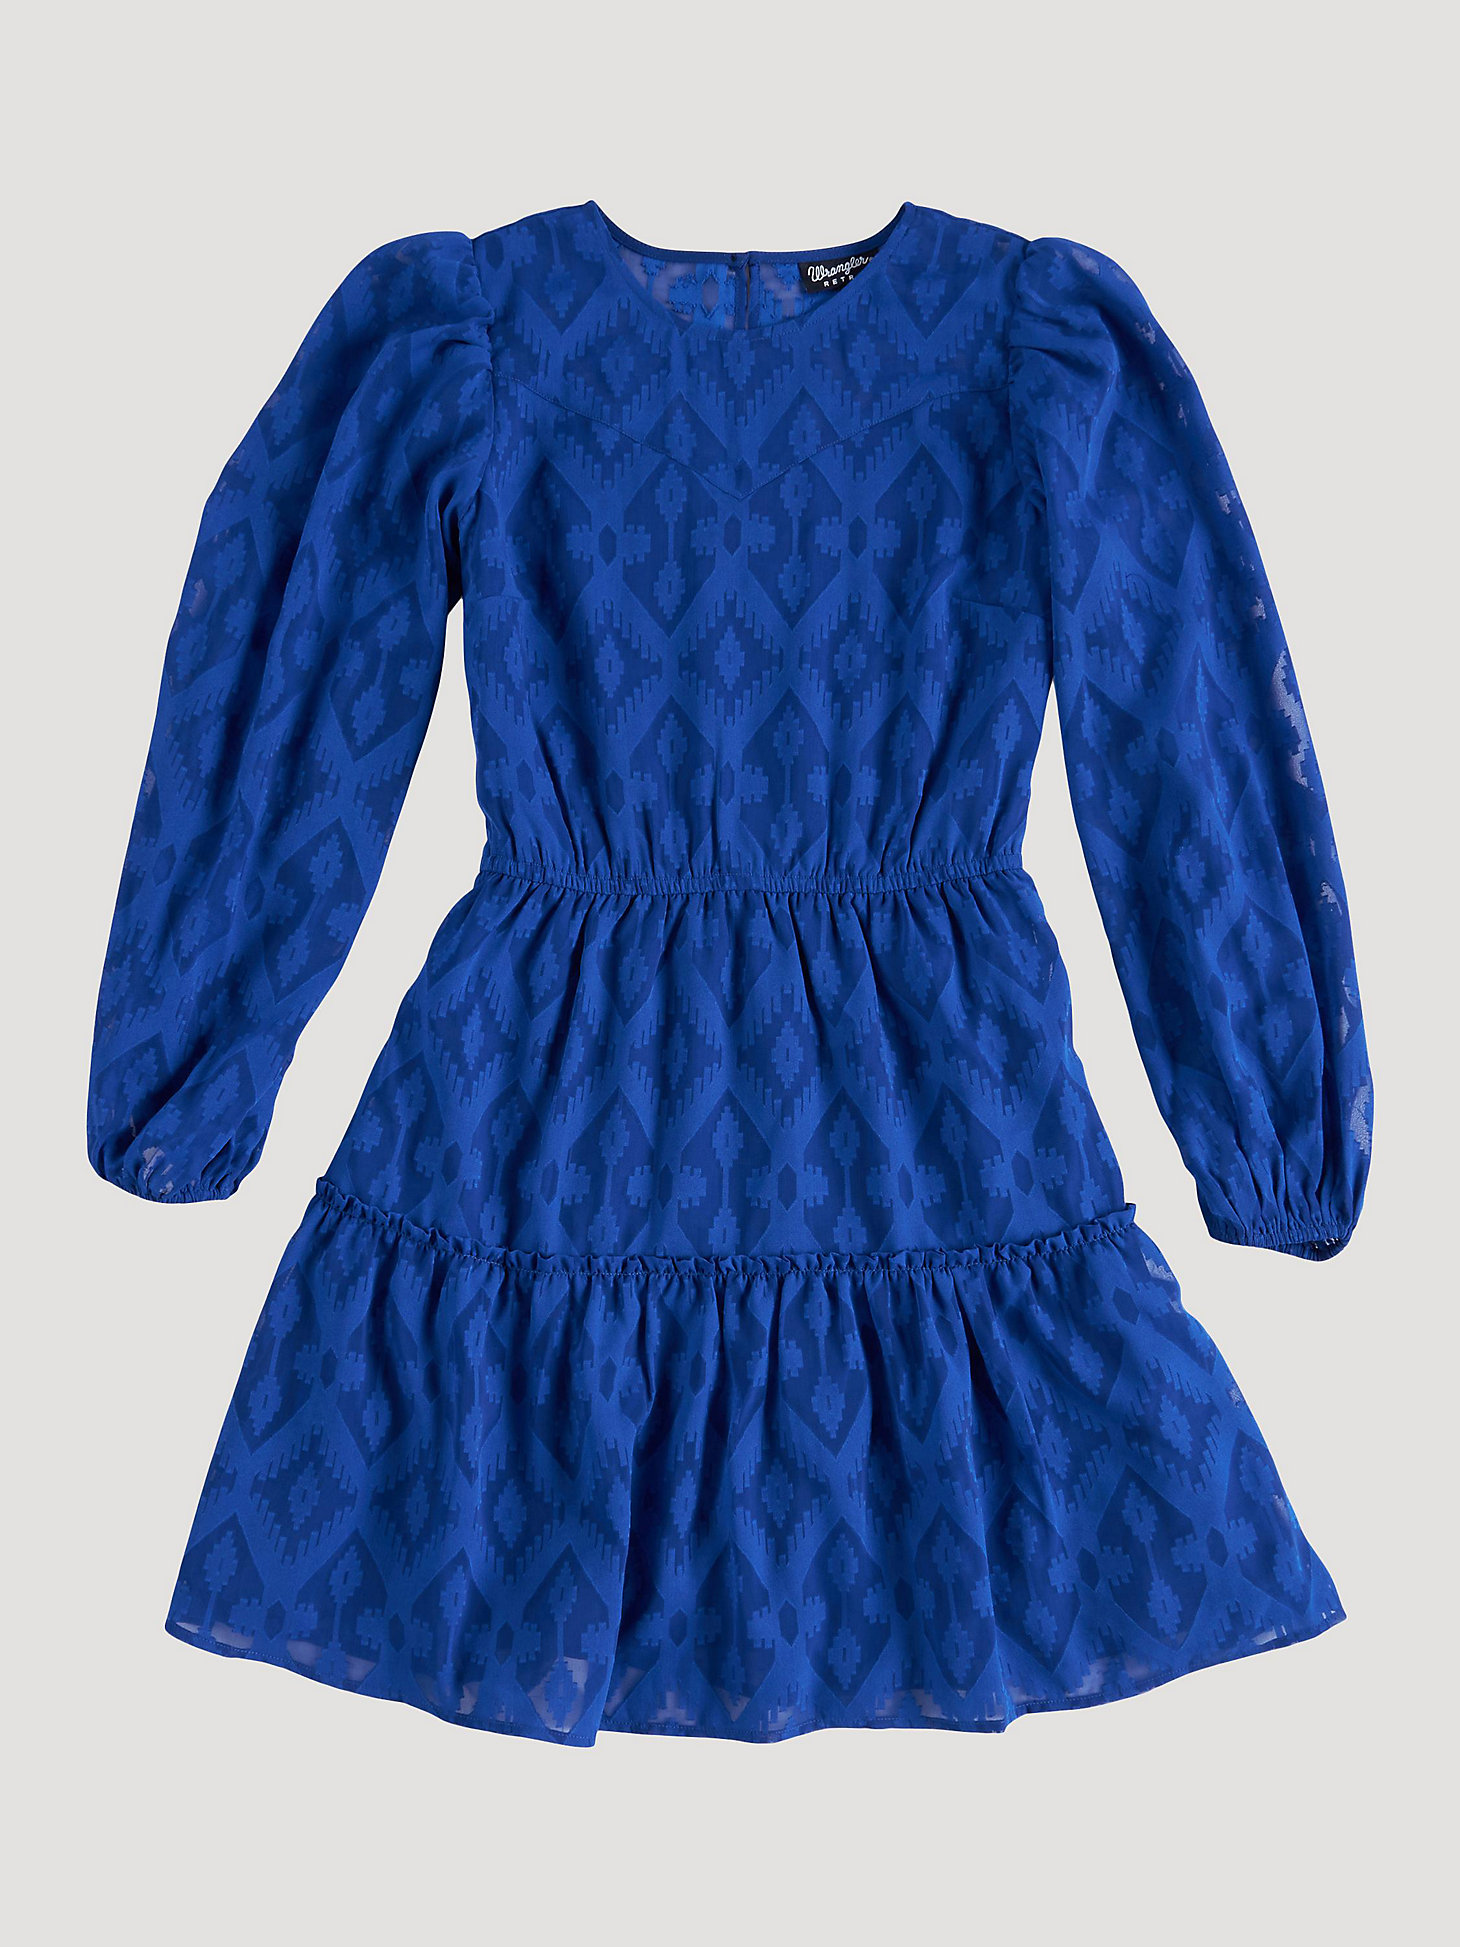 Women's Wrangler Retro® Vintage Tiered Long Sleeve Dress in blue alternative view 4